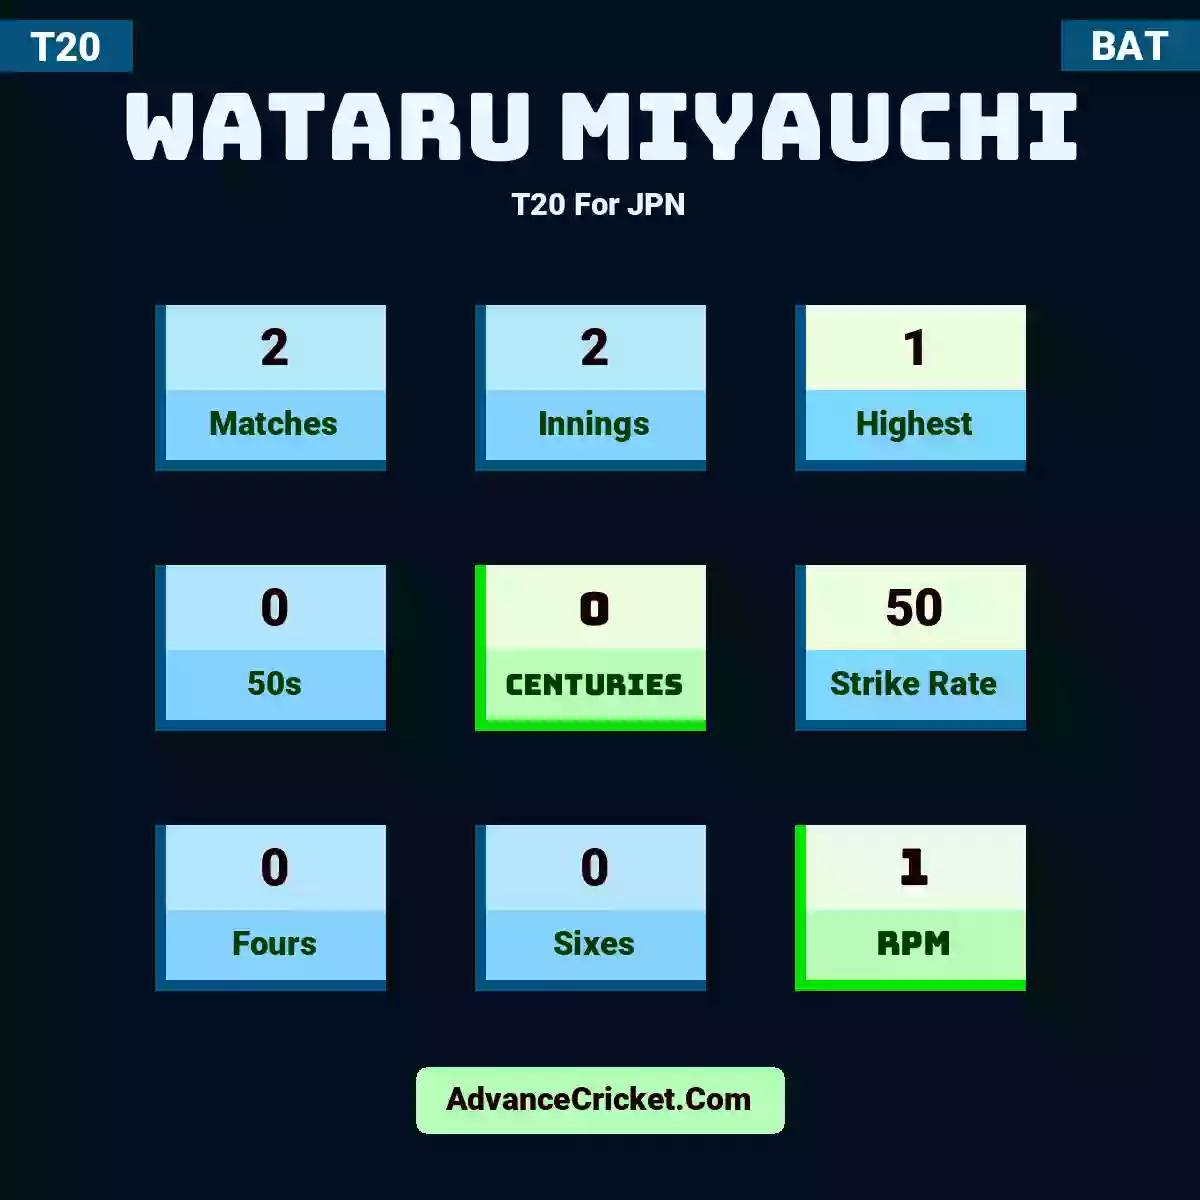 Wataru Miyauchi T20  For JPN, Wataru Miyauchi played 2 matches, scored 1 runs as highest, 0 half-centuries, and 0 centuries, with a strike rate of 50. W.Miyauchi hit 0 fours and 0 sixes, with an RPM of 1.